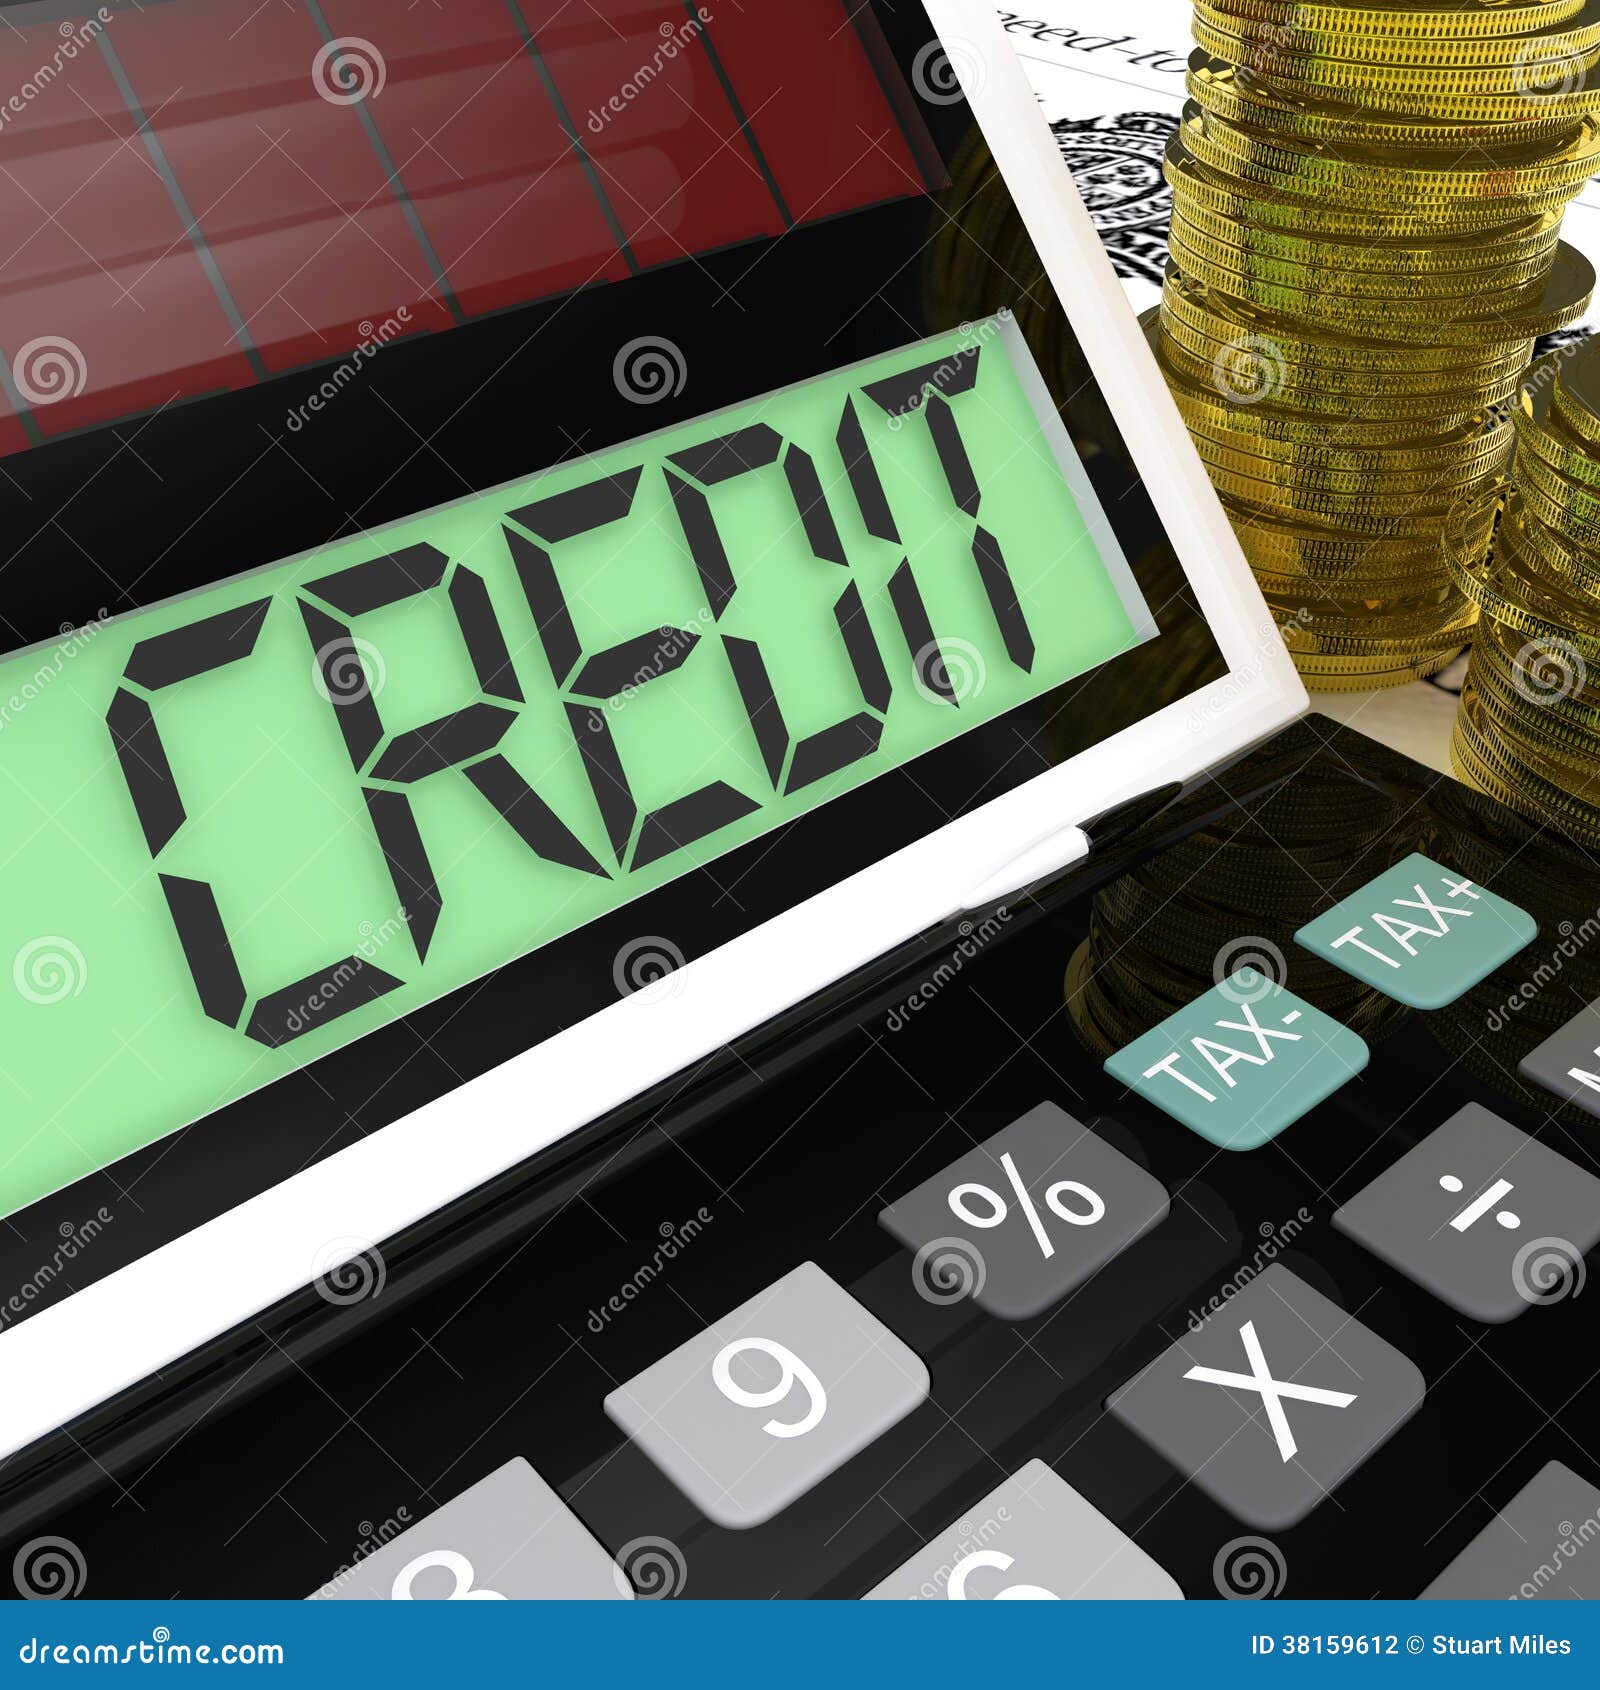 credit calculator shows financing borrowing or loan